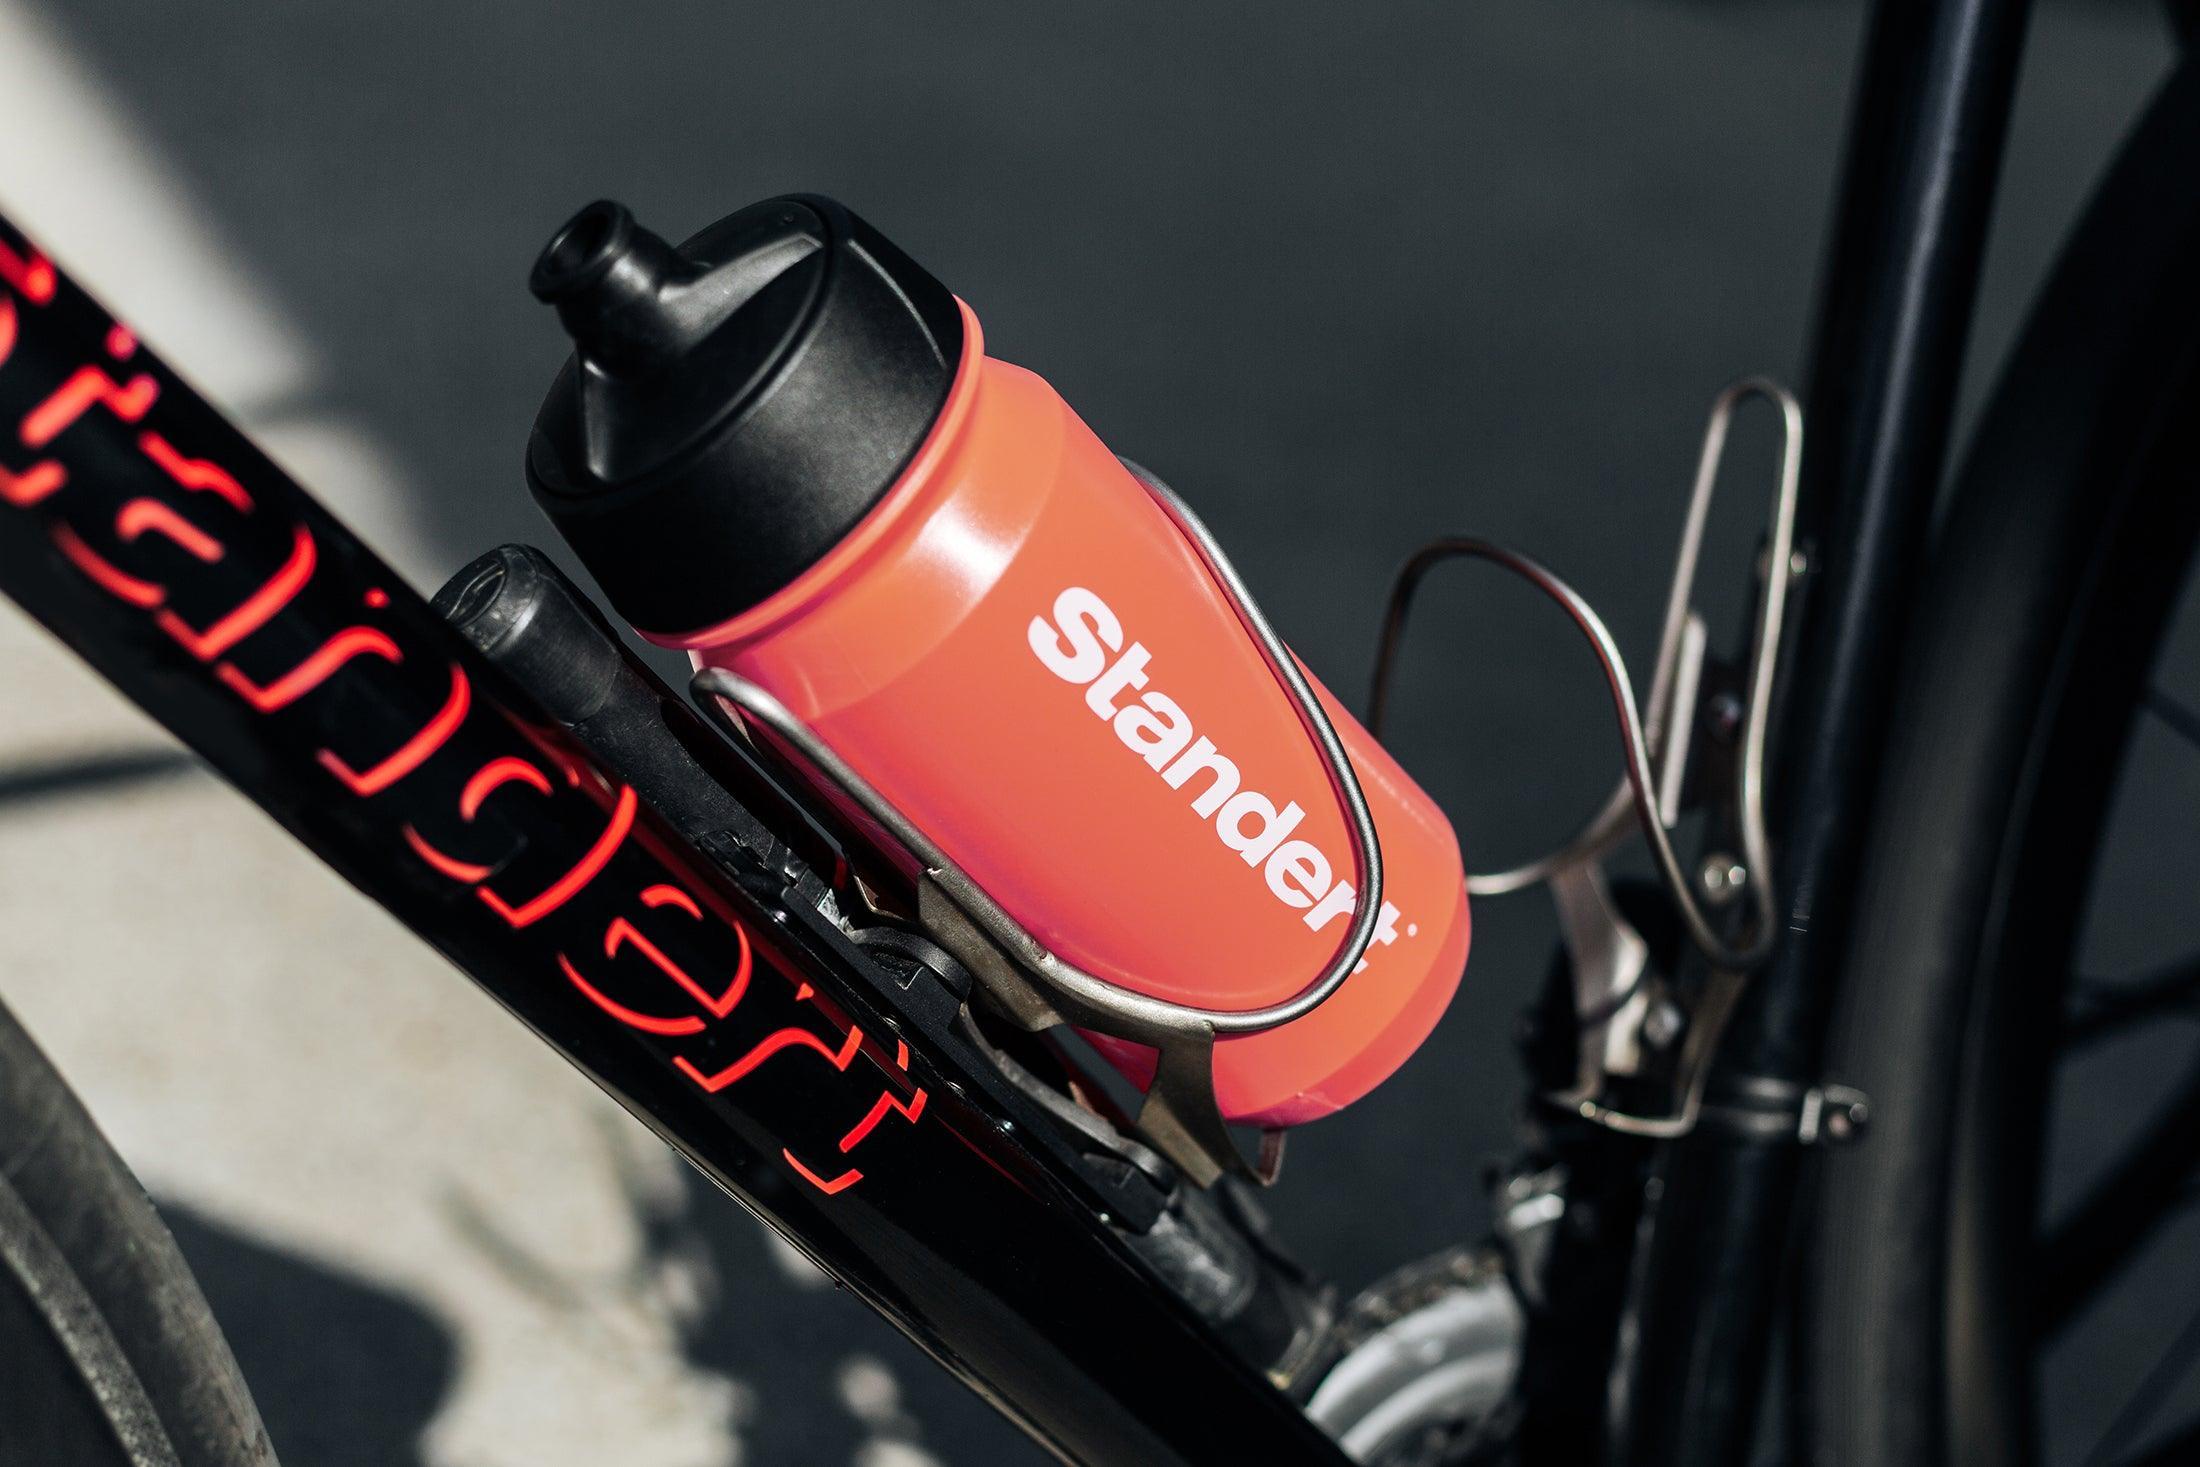 Cycling Bidons & BPA Free Water Bottles by Standert Premium